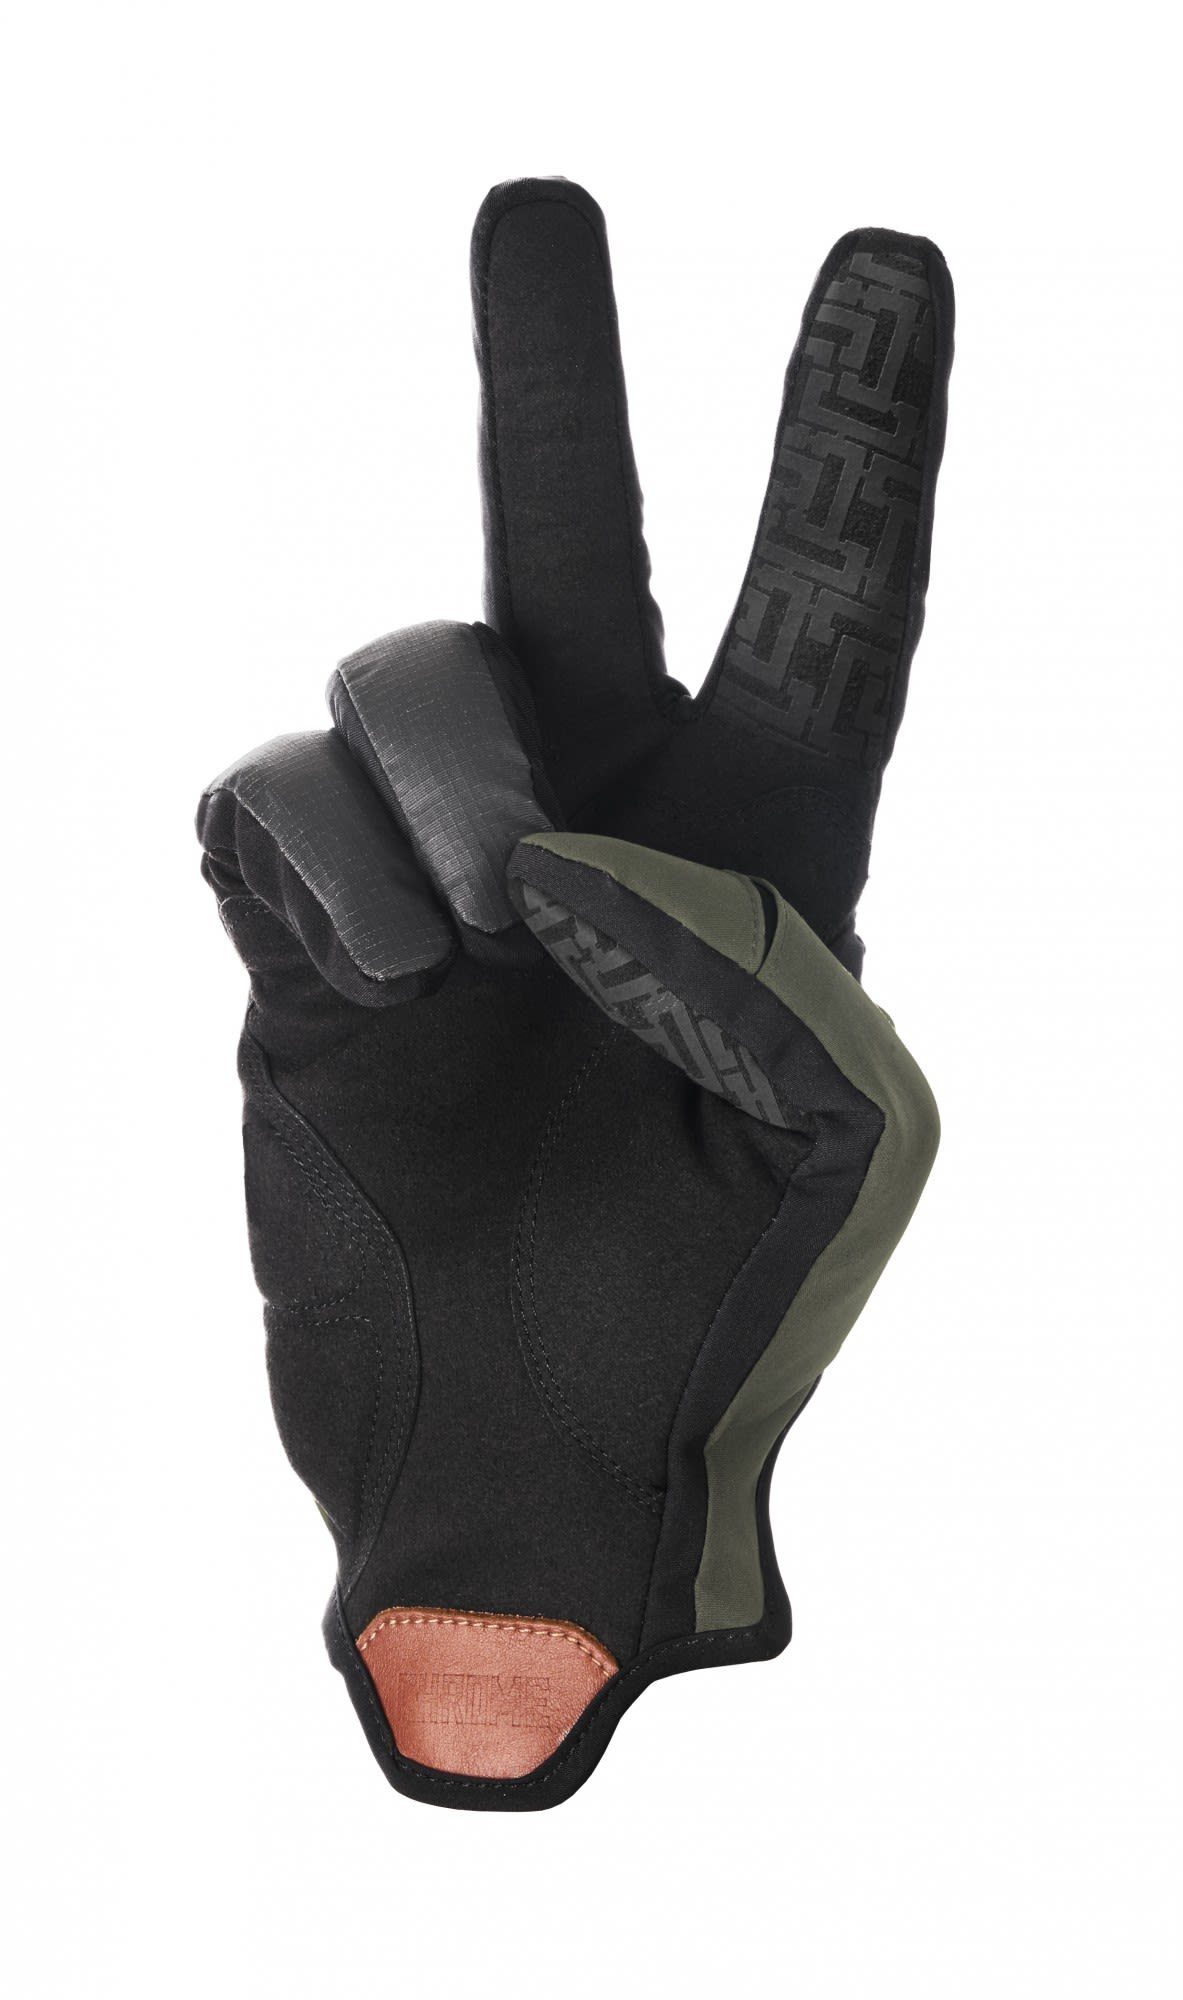 Green Black Chrome Fleecehandschuhe Industries Chrome Midweight - Gloves Cycle